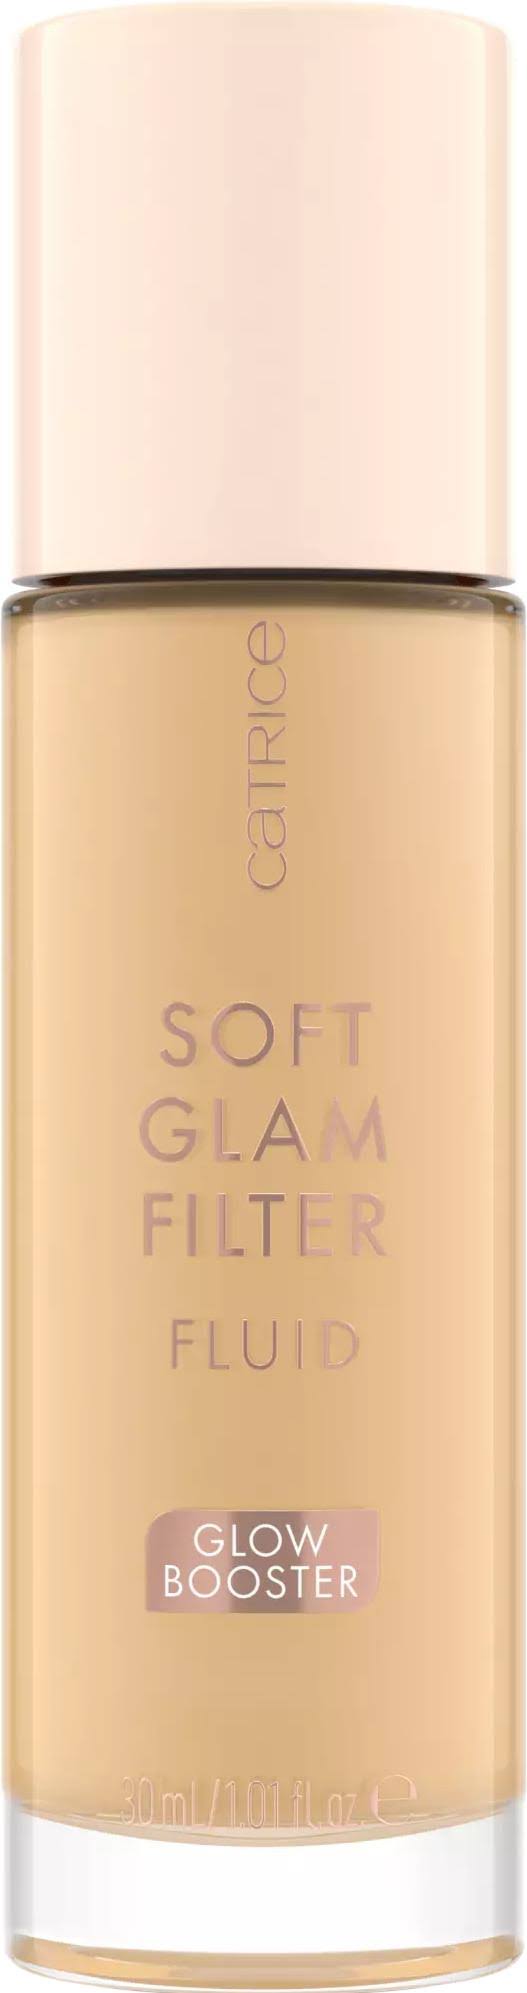 Catrice Soft Glam Filter Fluid Glow Booster #020-light-medium